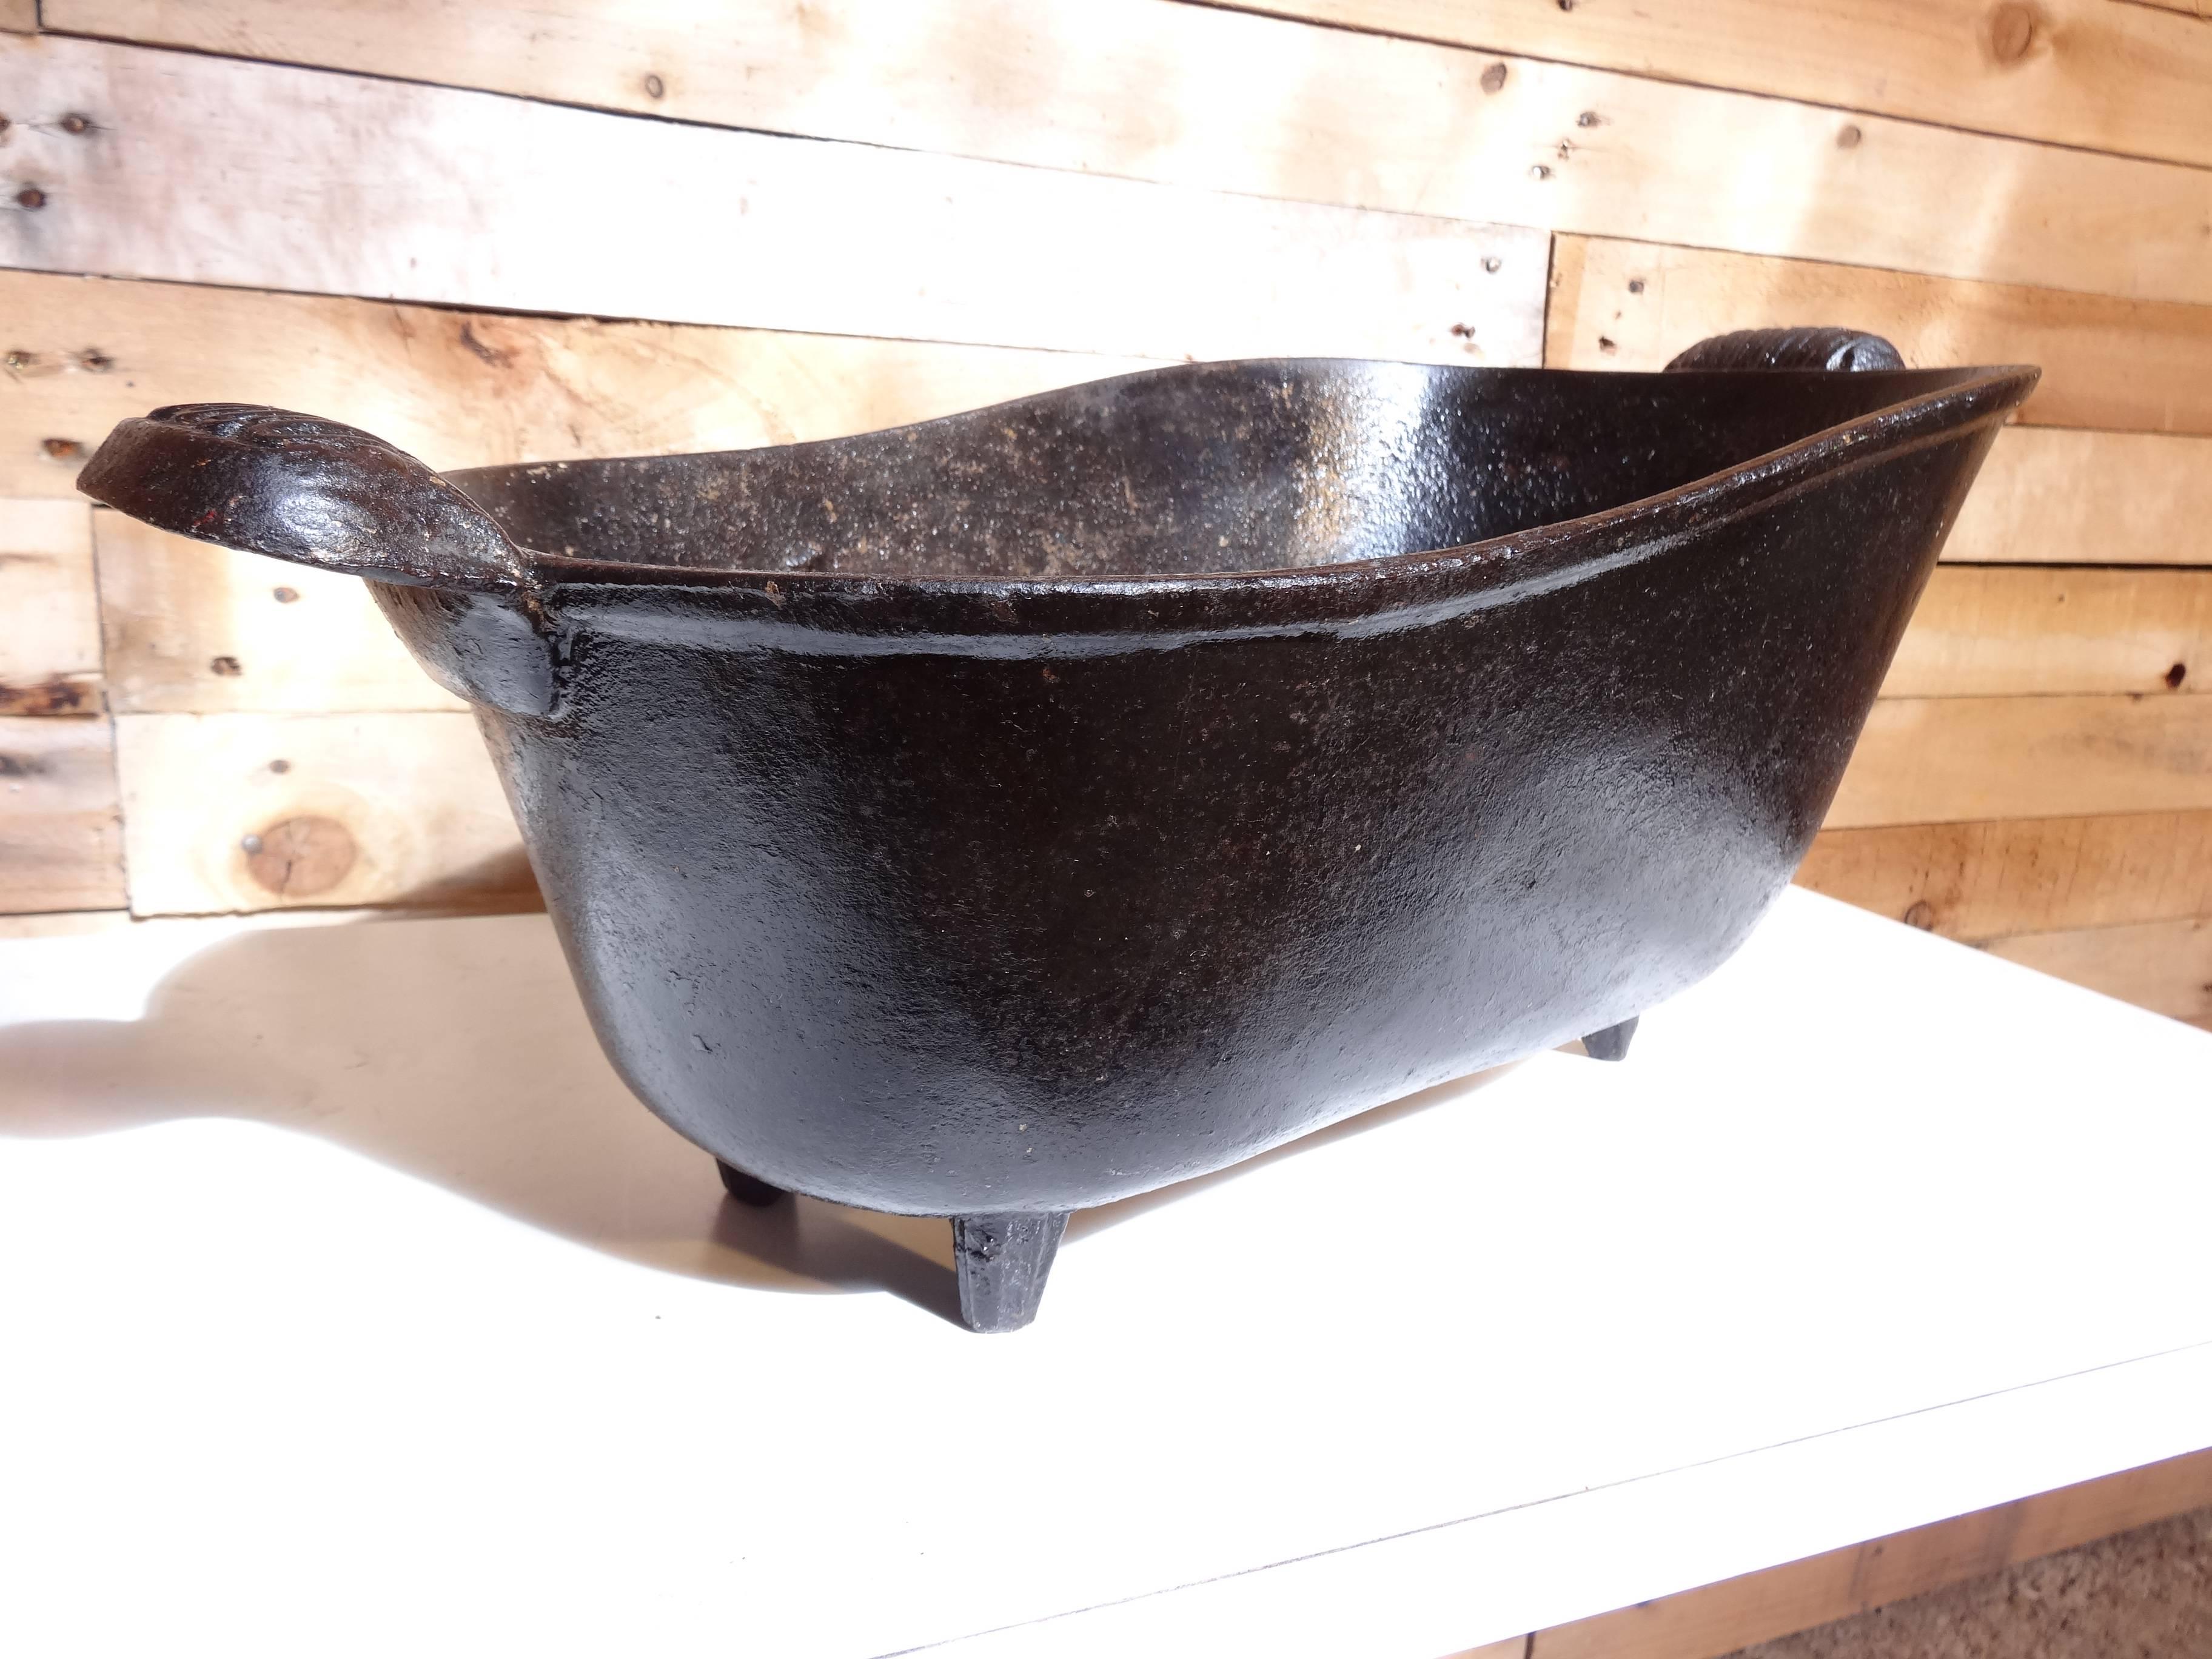 Victorian cast iron bath (mini).
Measures:
Height: 25 cm, depth: 26 cm, width: 57 cm.